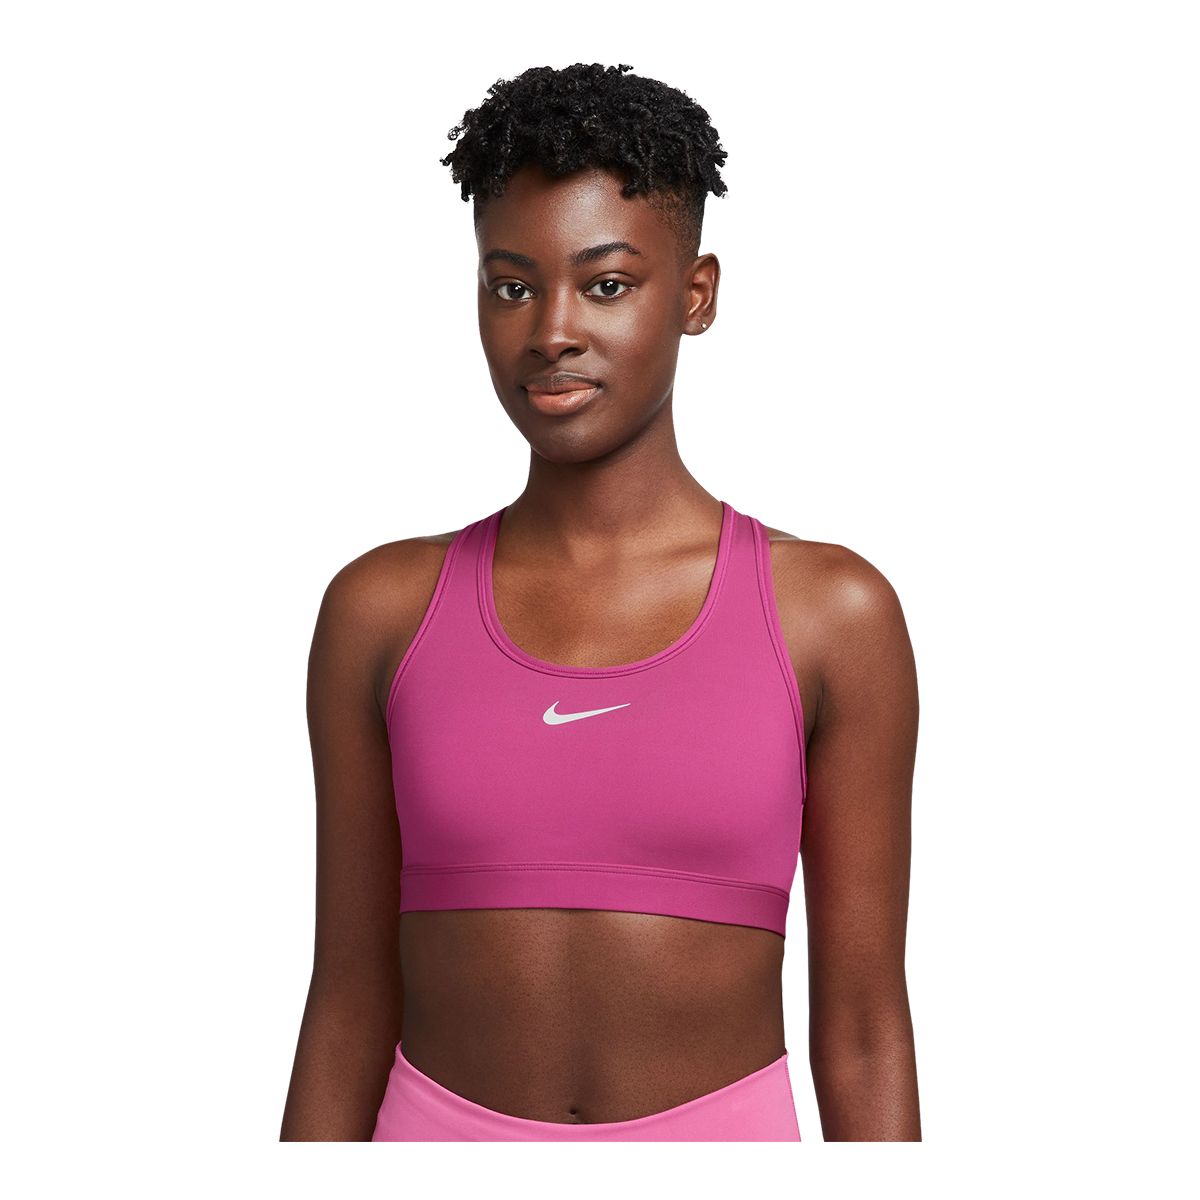 Nike Favorites Novelty Women's Light-Support Sports Bra CJ0794-010 Size XS